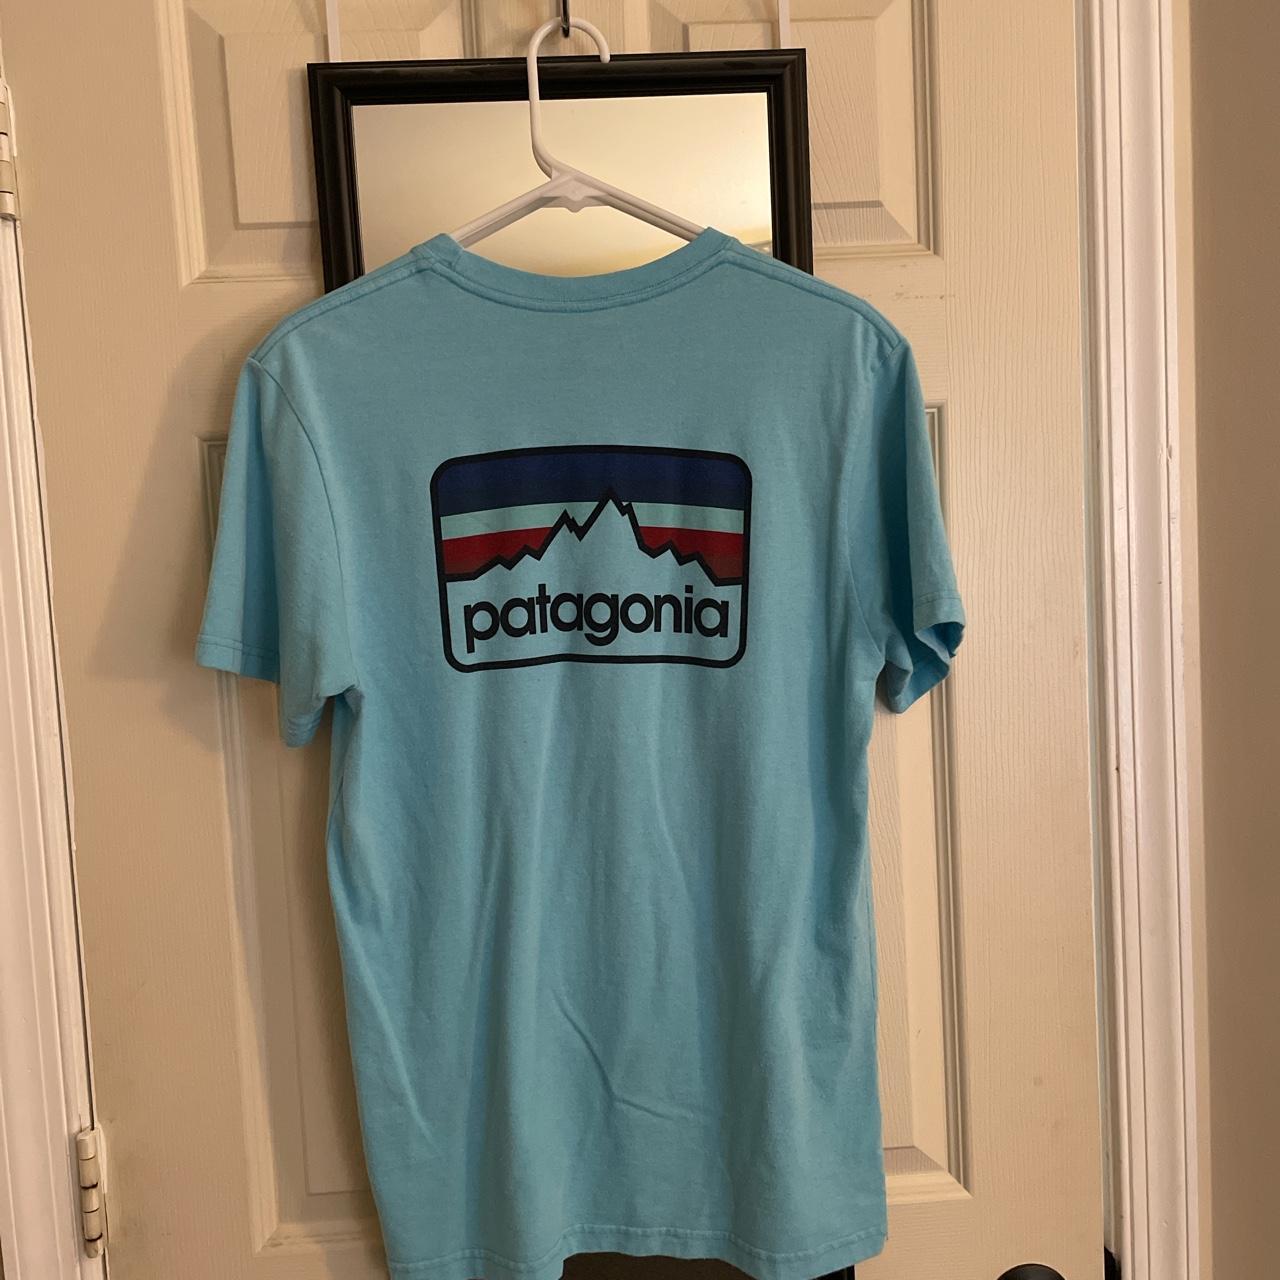 Teal Patagonia T-Shirt Size Small No flaws #Patagonia - Depop